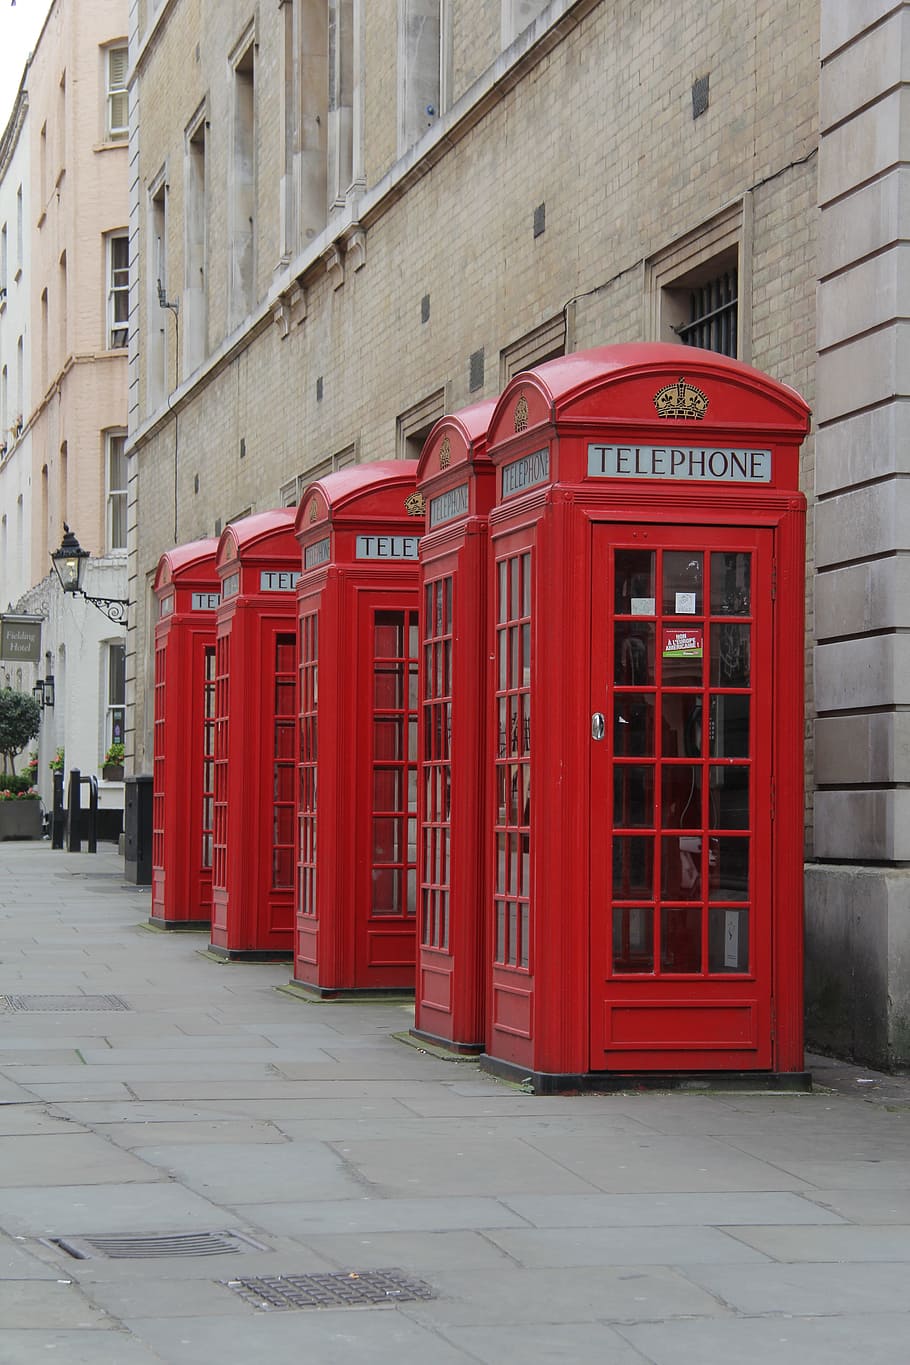 Varias cabinas telefónicas, cabina telefónica roja, Londres, teléfono, cabina telefónica, Reino Unido, Inglaterra, exterior del edificio, arquitectura, rojo